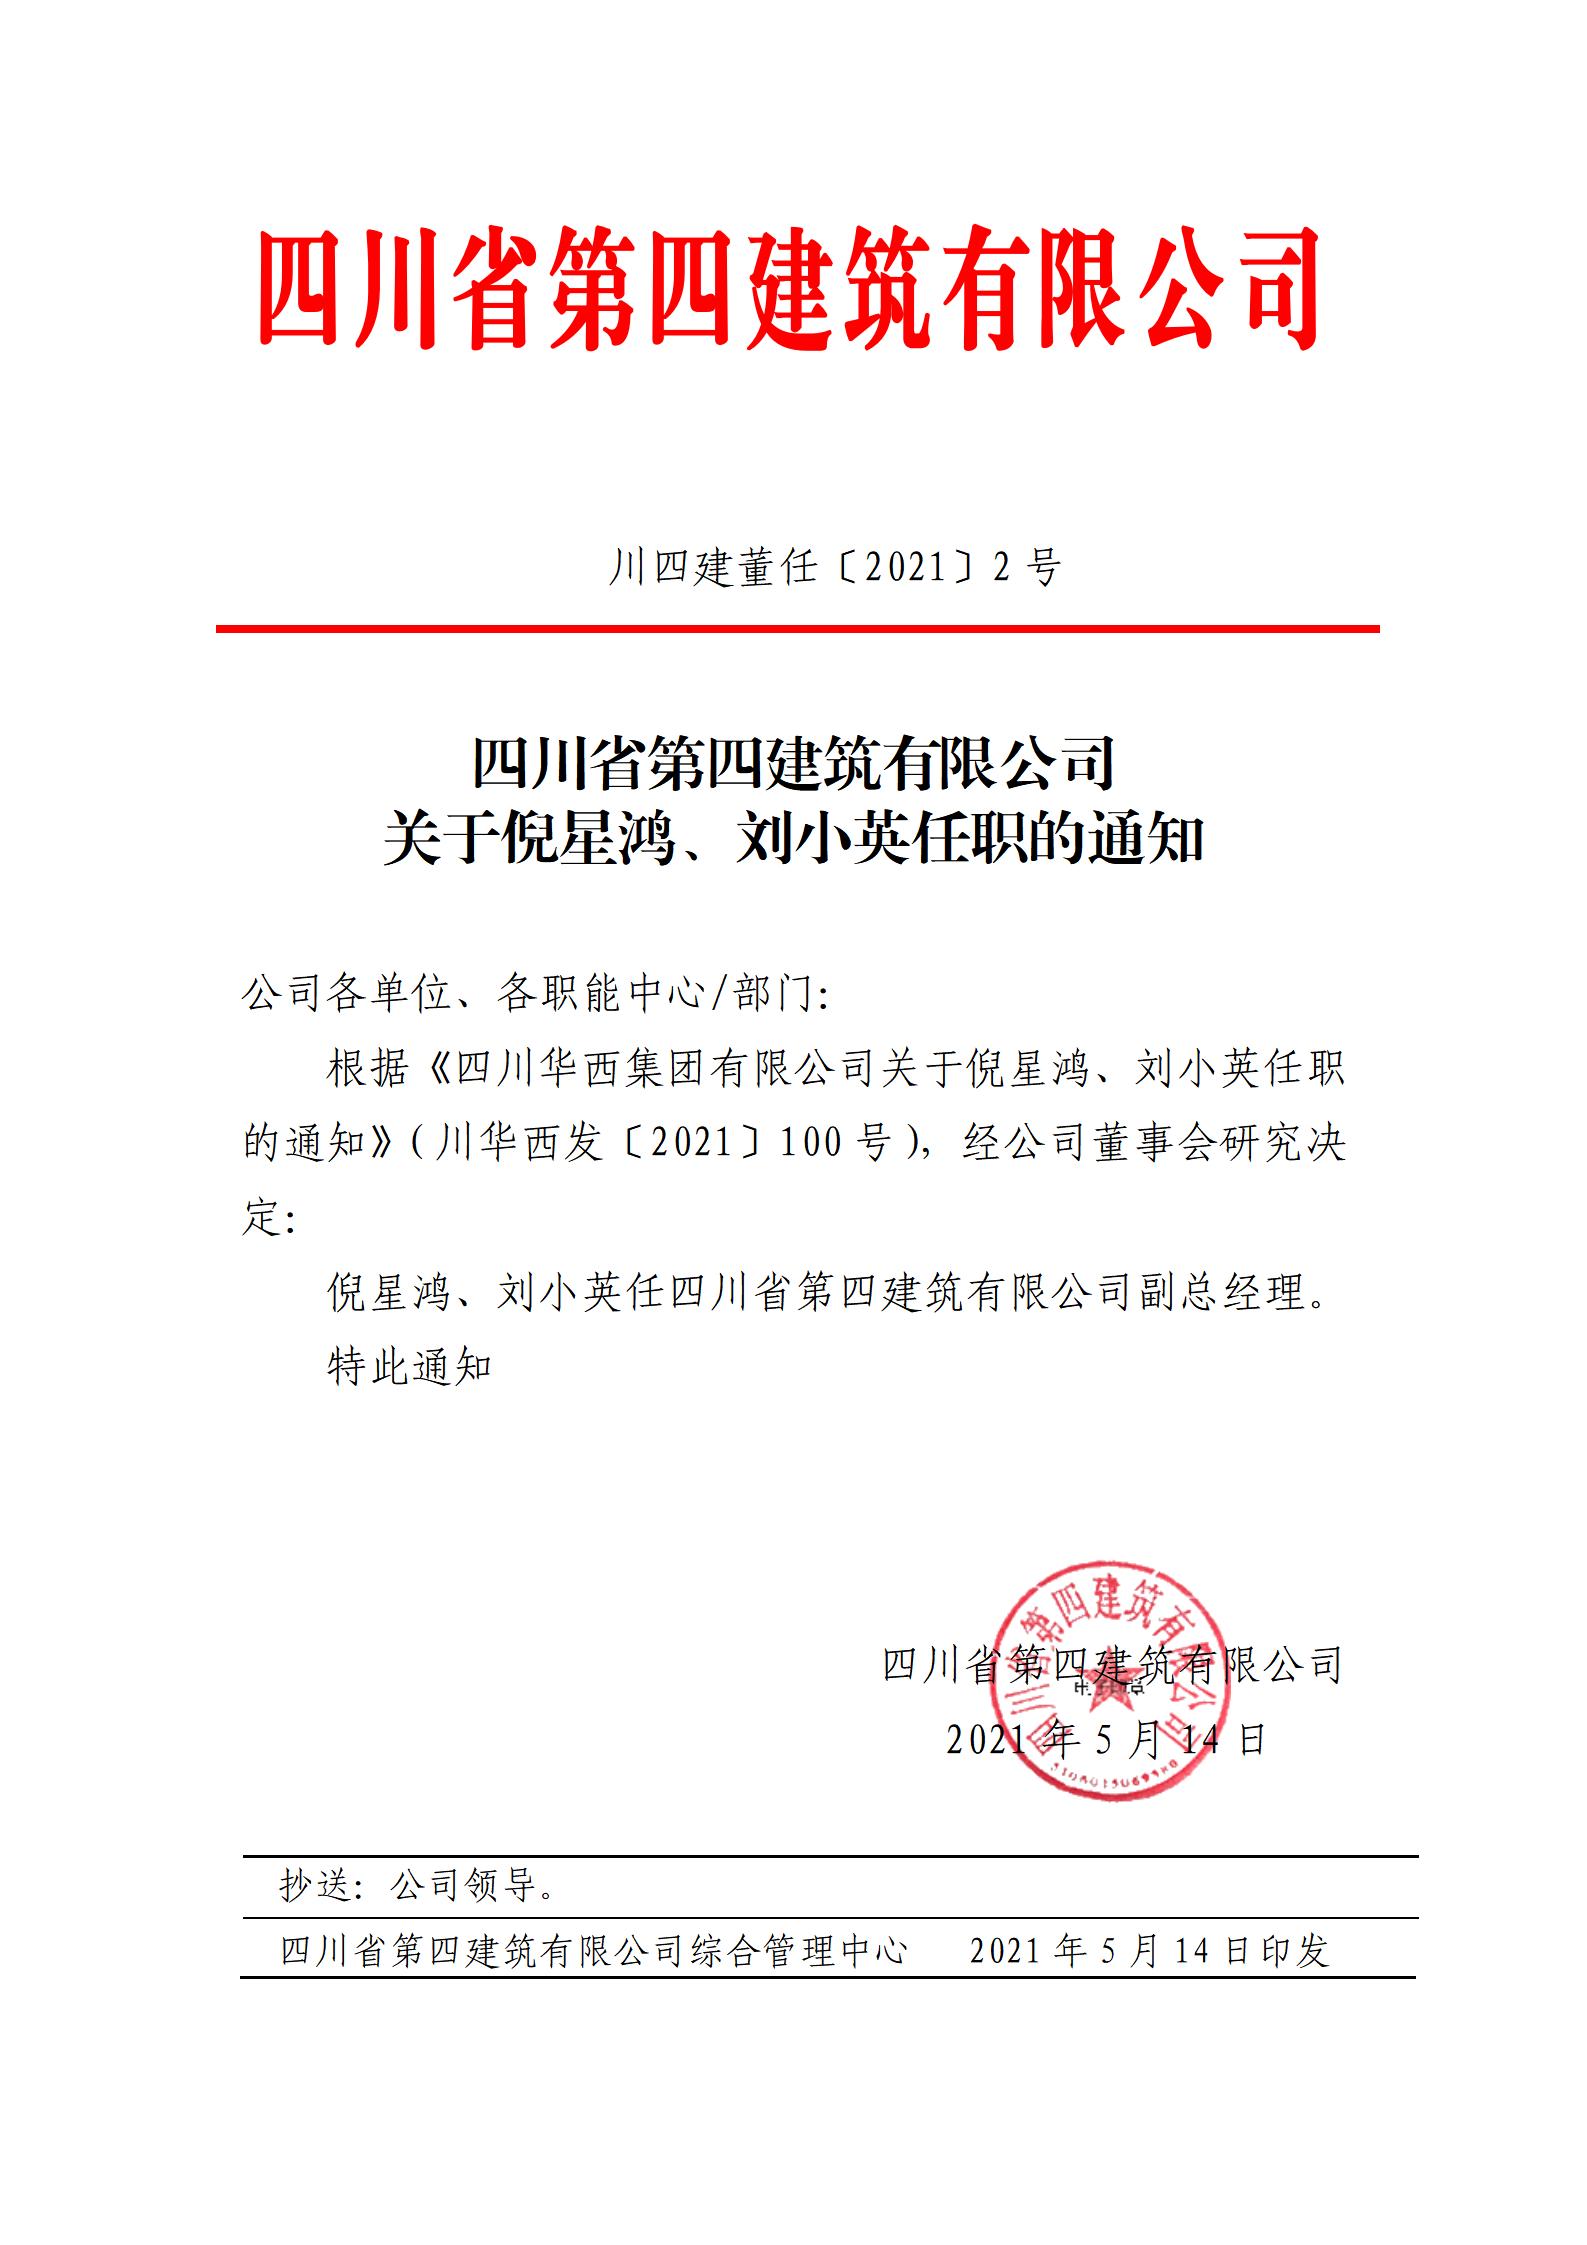 bat365在线唯一官网登录关于倪星鸿、刘小英任职的通知_01